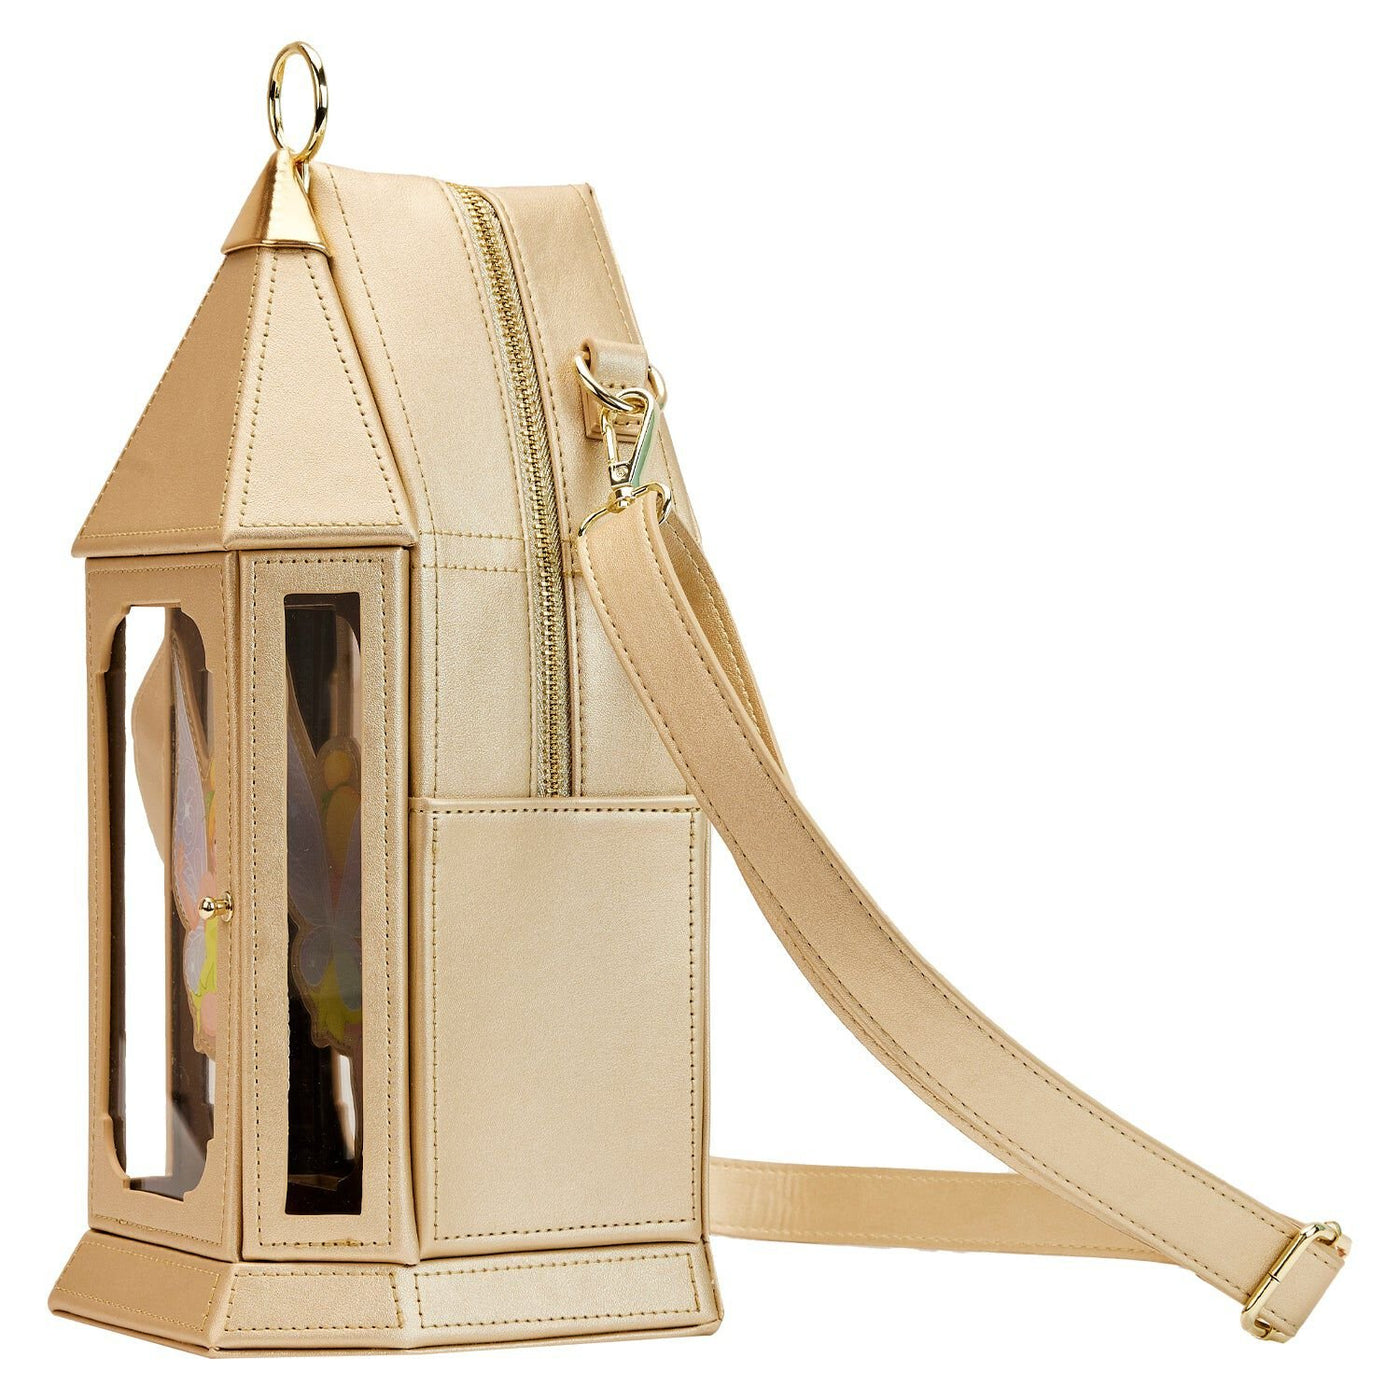 Buy Stitch Shoppe Rapunzel's Lantern Glow Crossbody Bag at Loungefly.